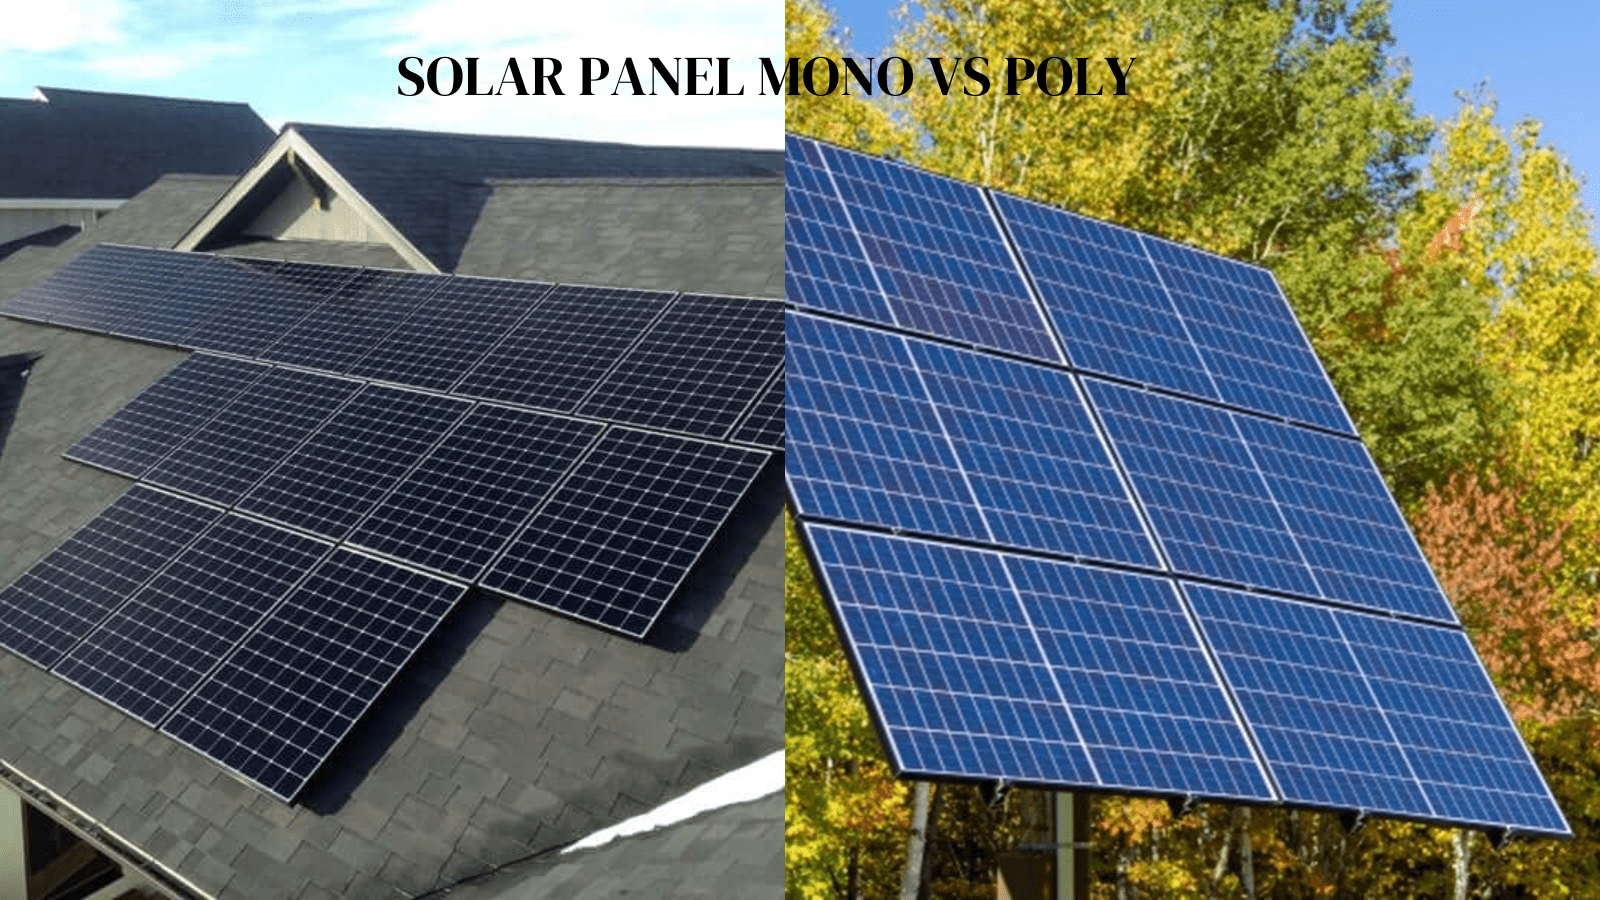 Solar Panel Mono vs Poly